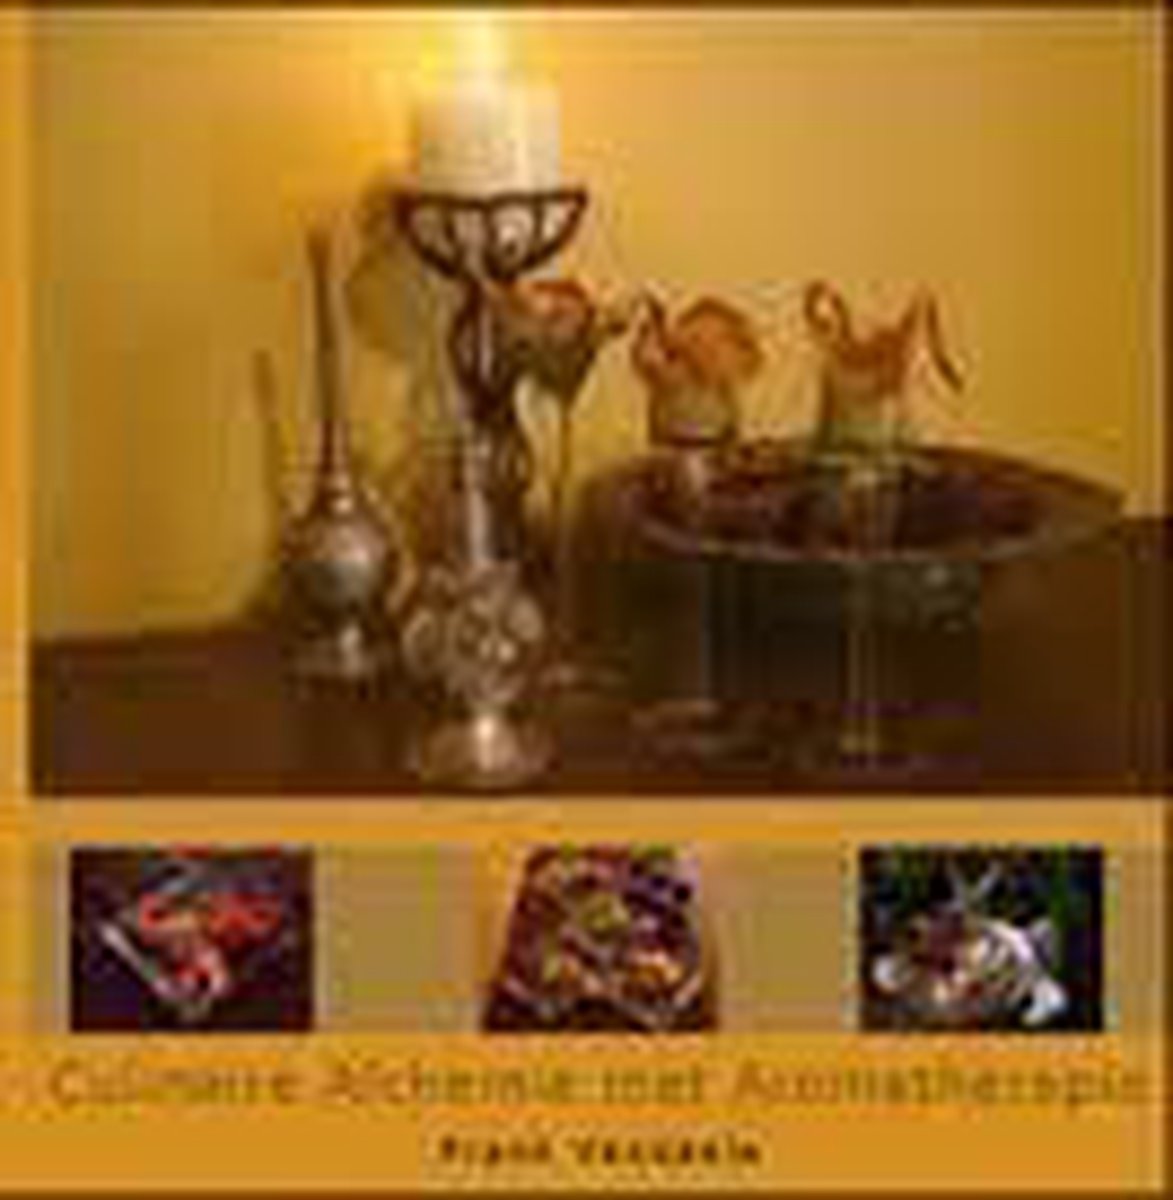 Culinaire alchimie met aromatherapie